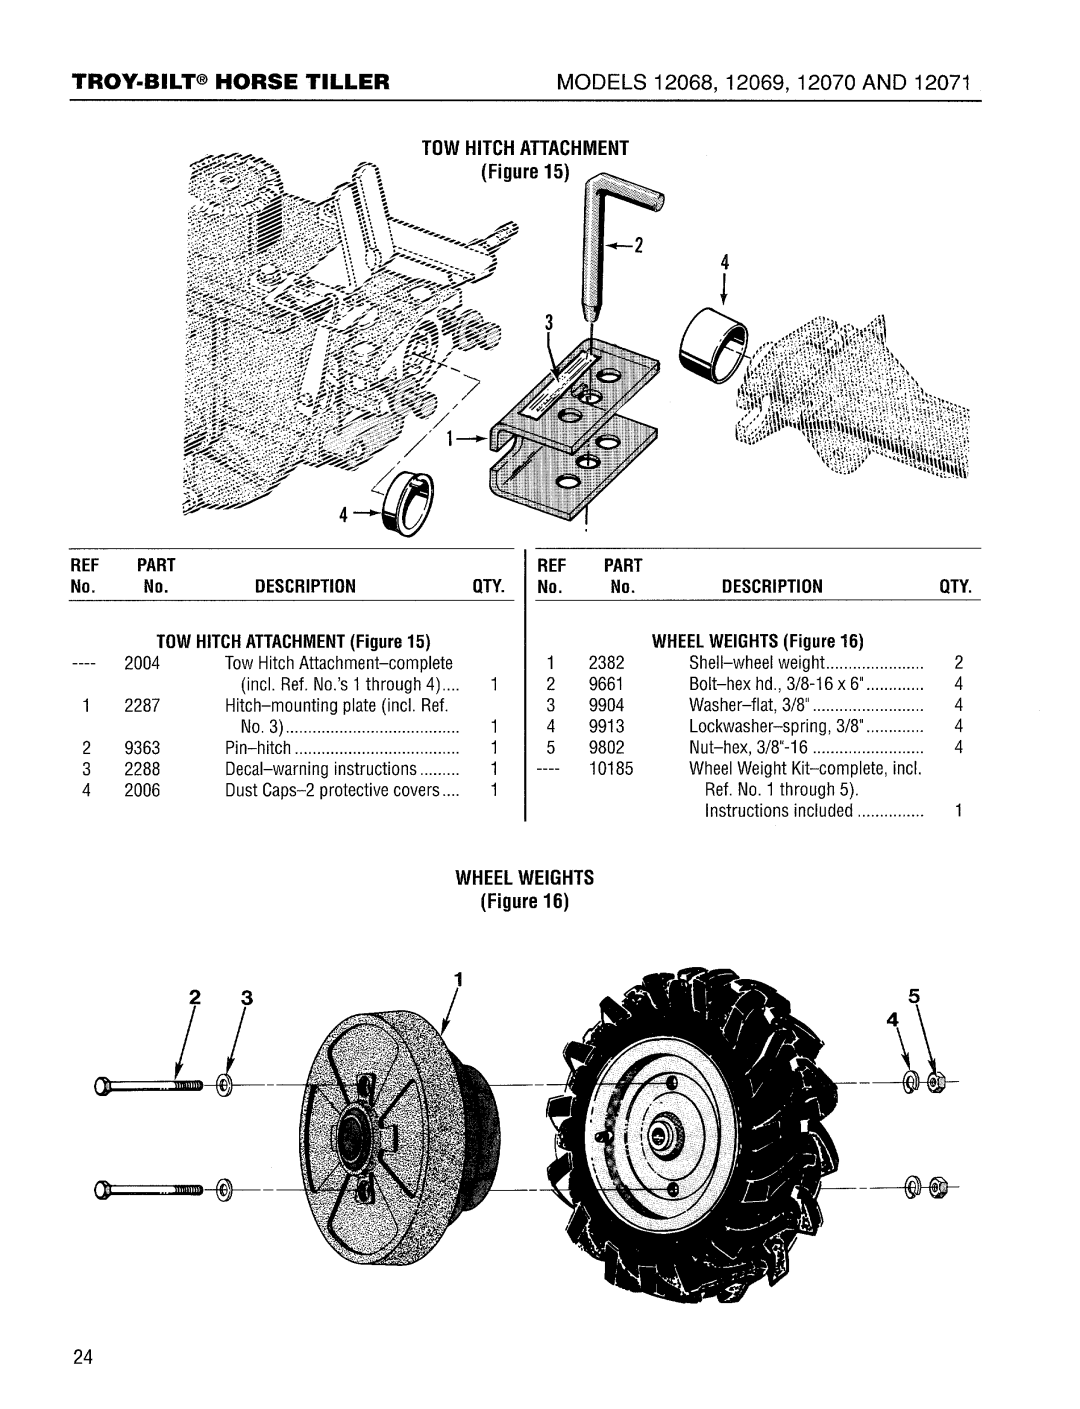 Troy-Bilt 12068-7HP manual 